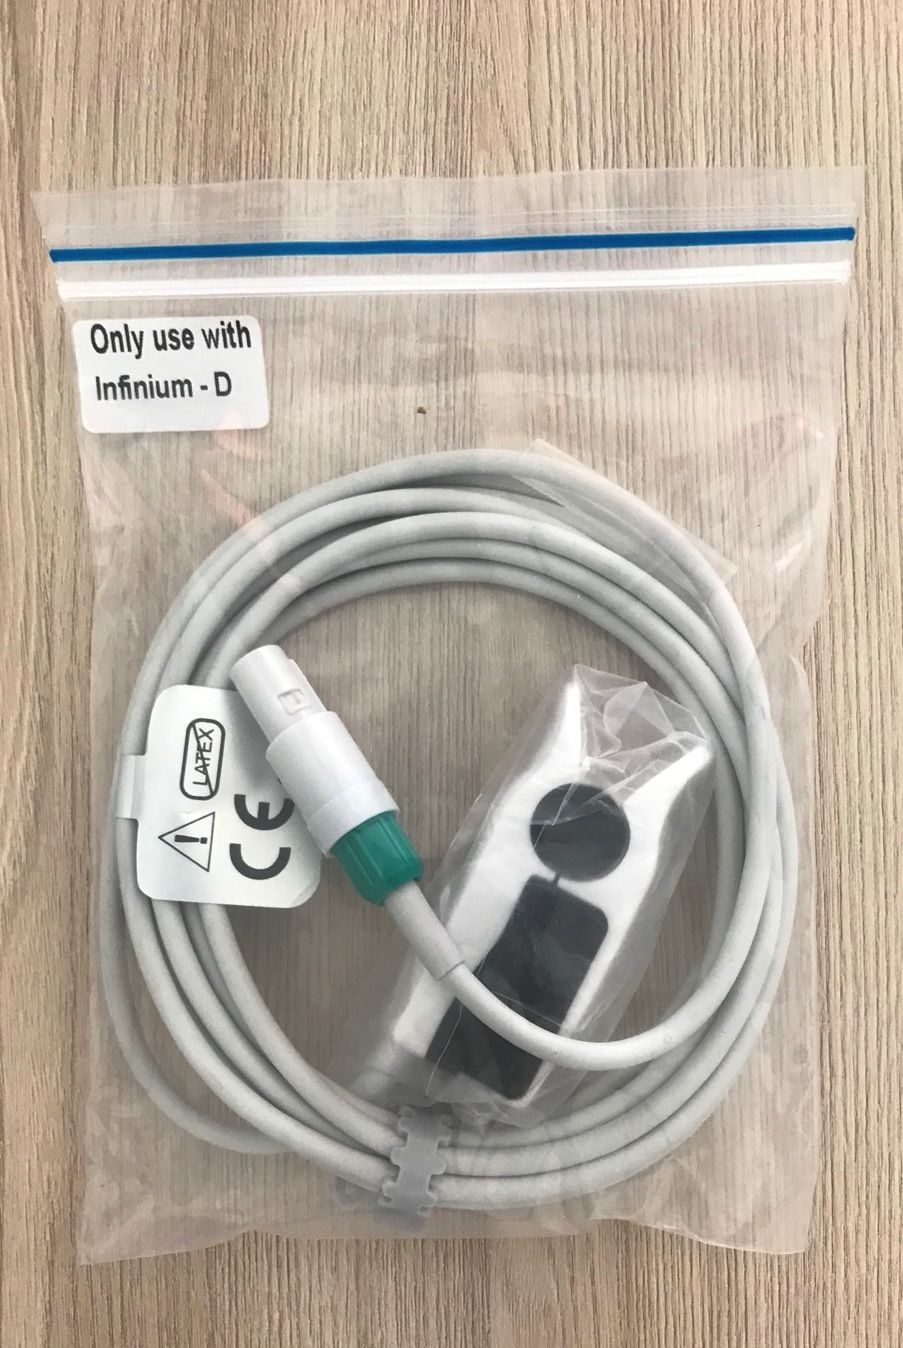 Spo2 Adult probe cable for Infinium Patient Monitor_สายแซทโพรบเคเบิ้ลวัดออกซิเจนที่ปลายนิ้วเครื่องมอนิเตอร์ Infinium